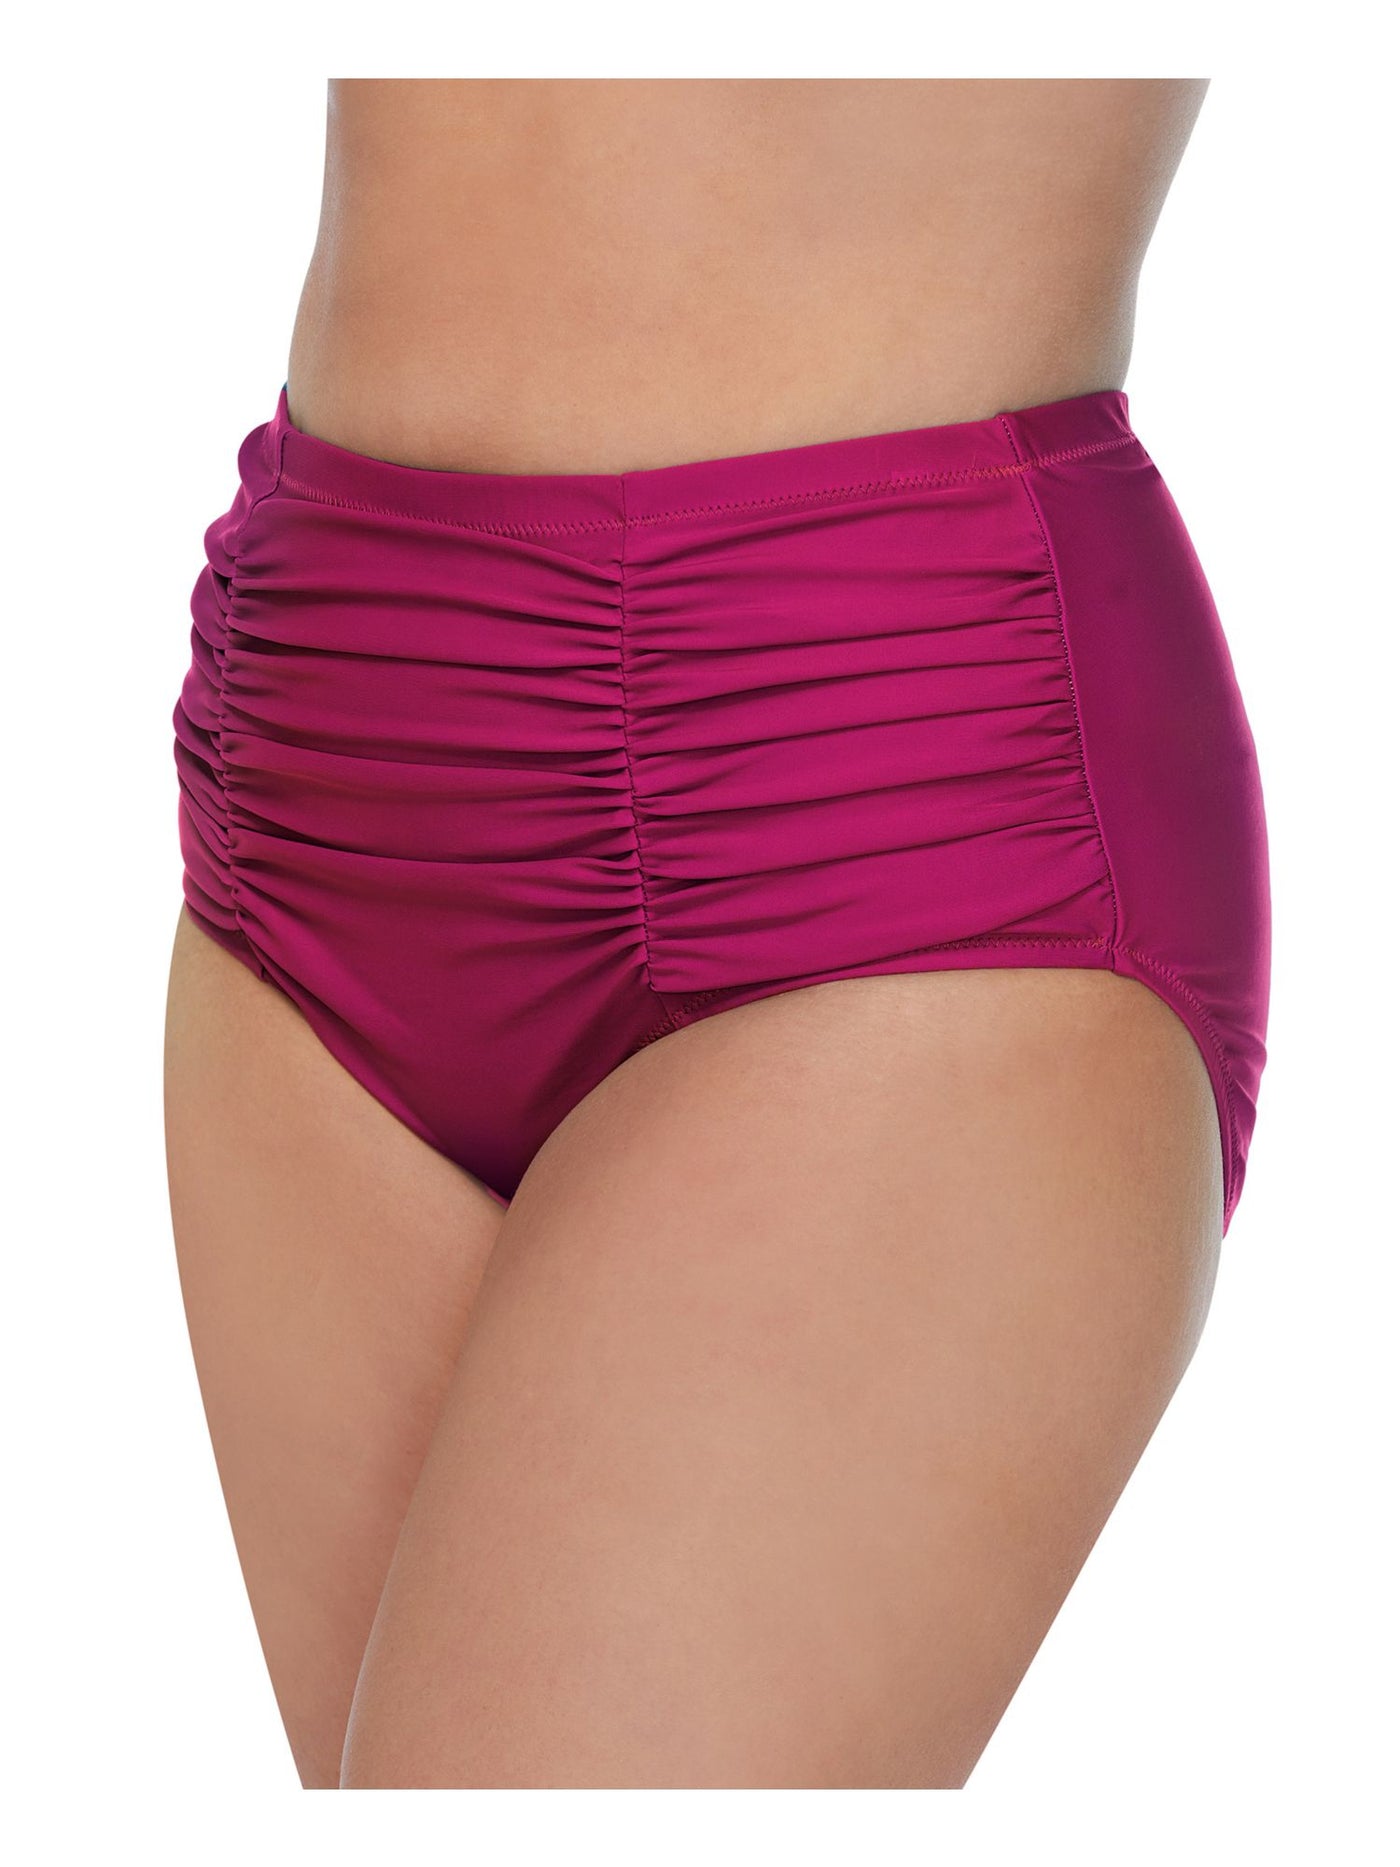 RAISINS CURVE Women's Pink Stretch Tummy Control RUCHED BIKINI Full Coverage Swimsuit Bottom 20W